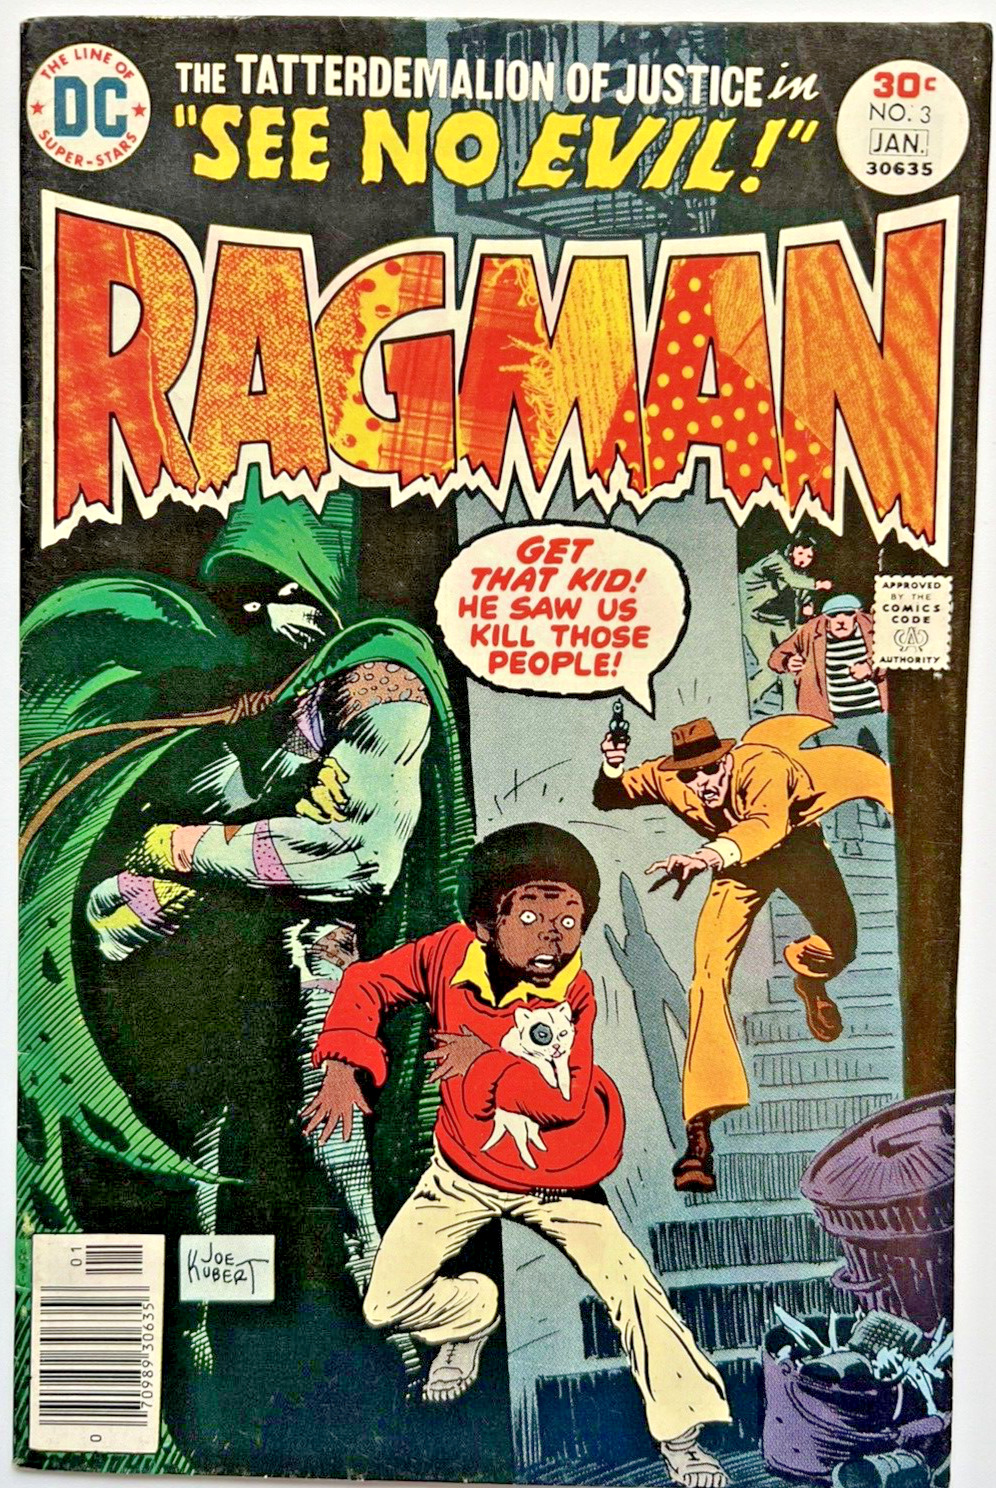 1976 DC COMICS RAGMAN SEE NO EVIL Vol 1 No 3 Artist Joe Kubert 1F